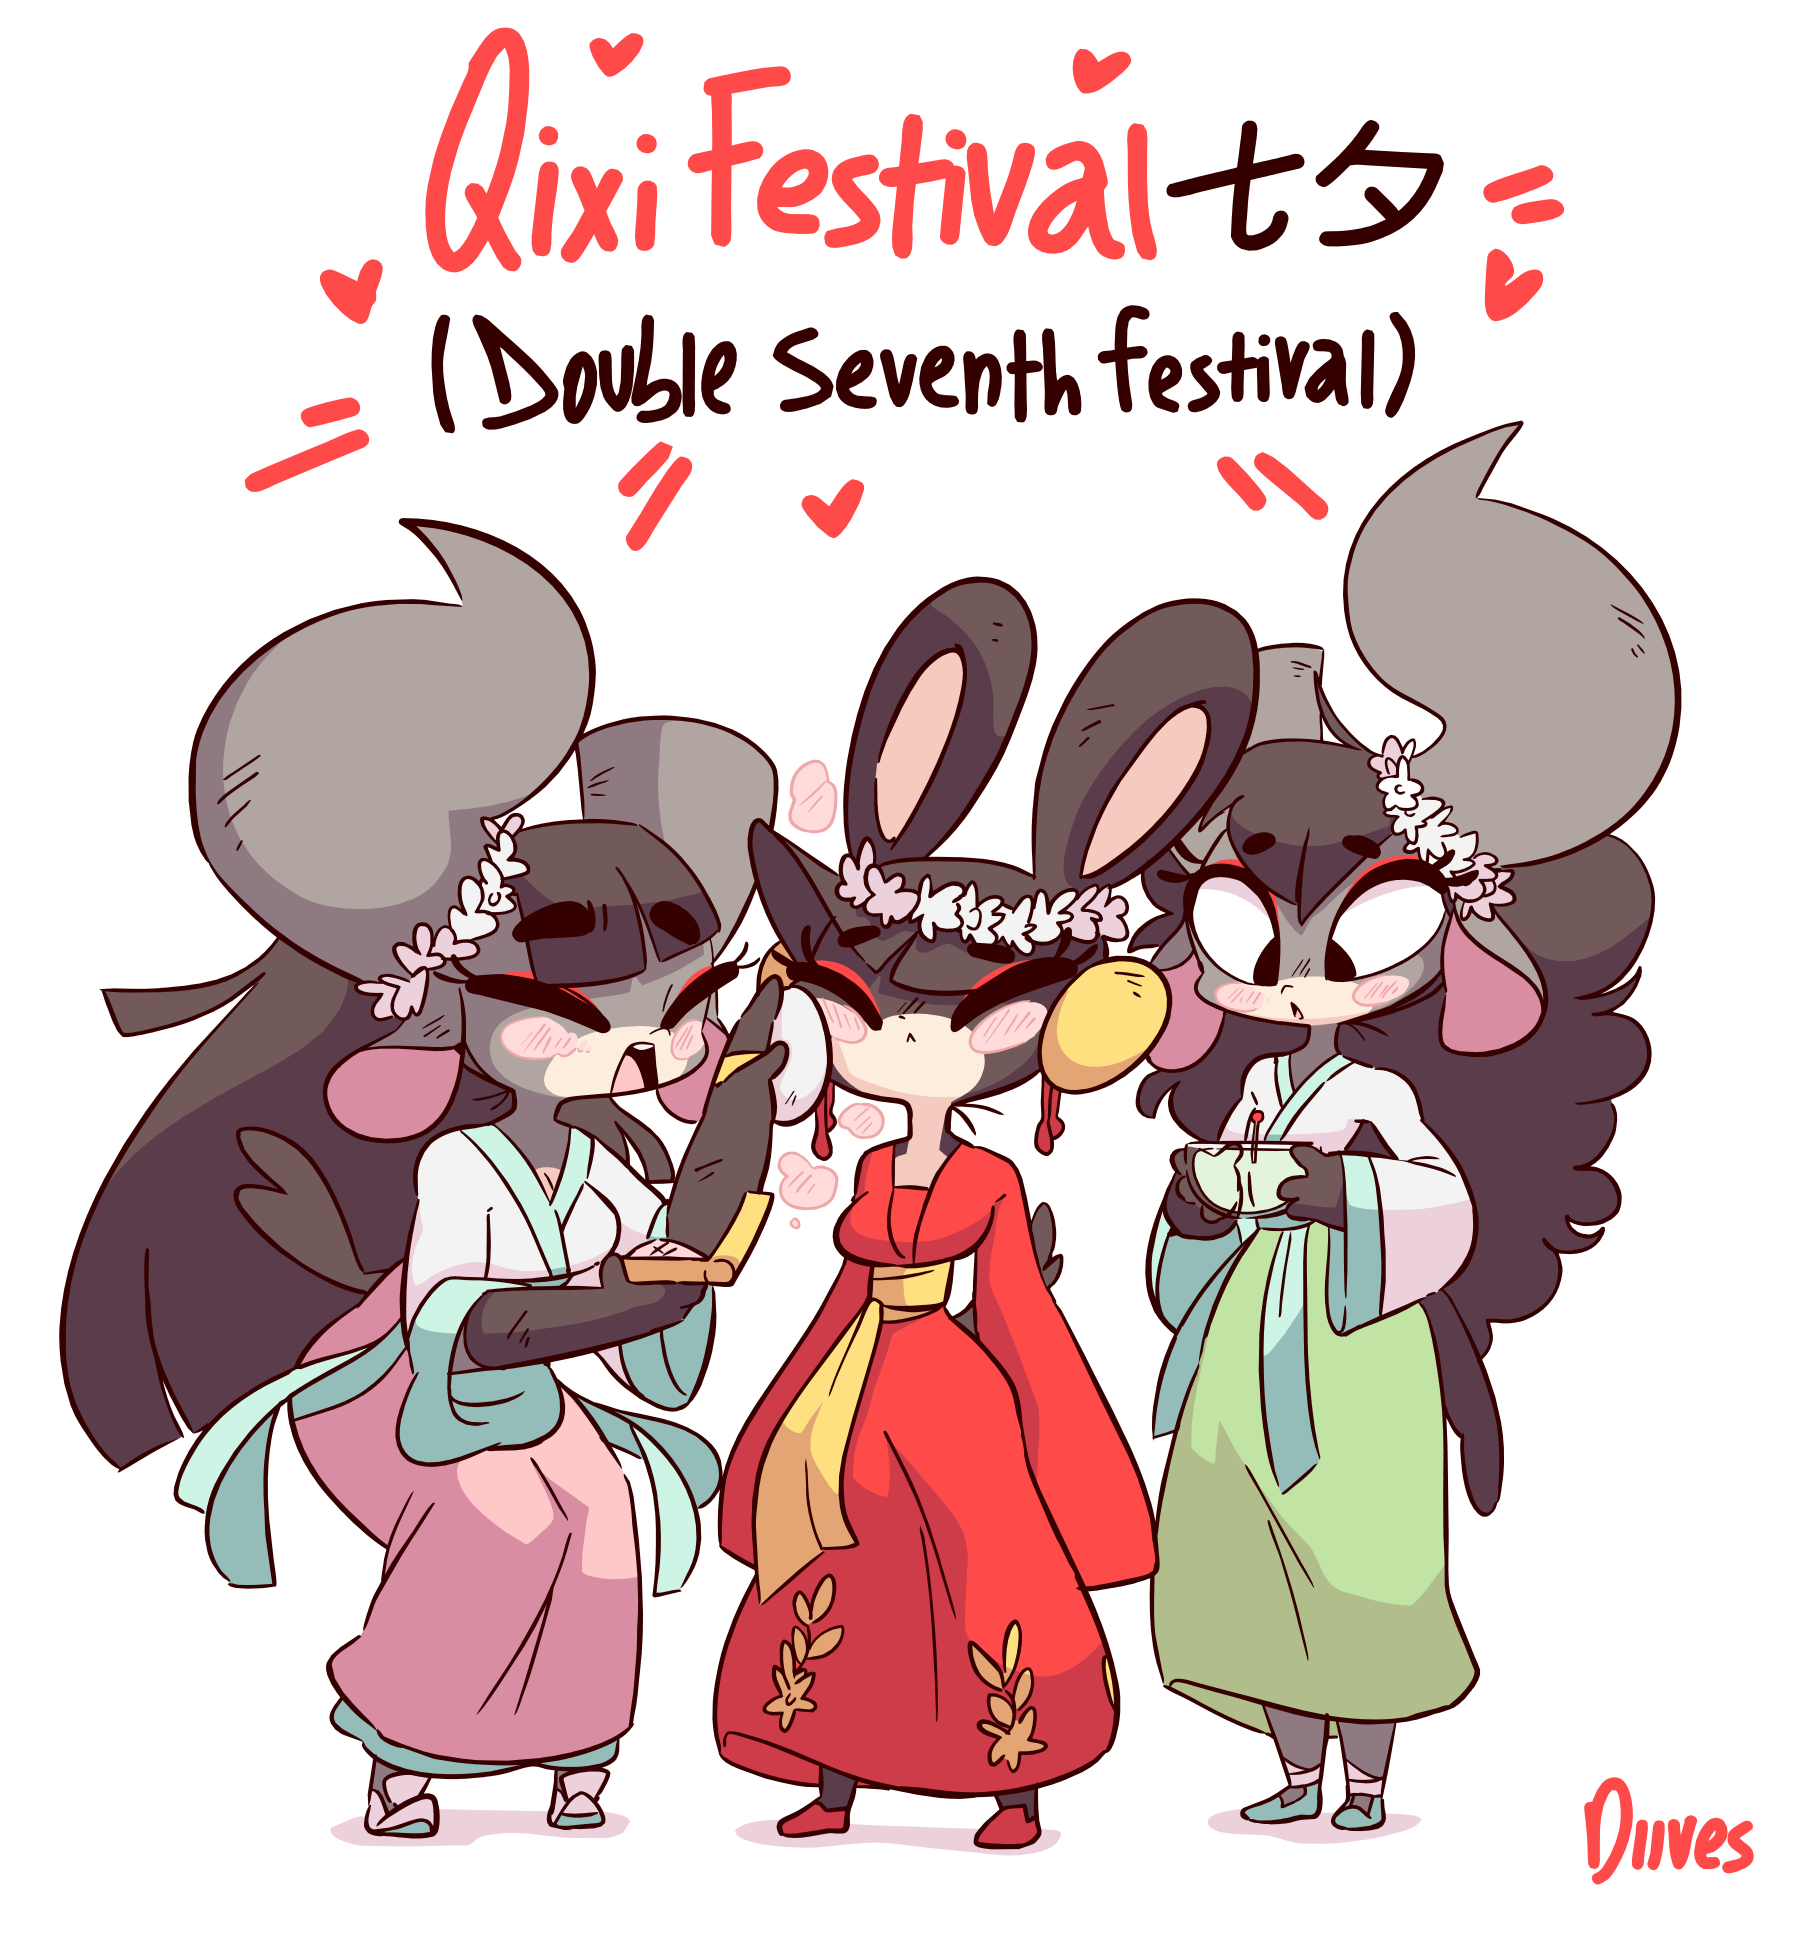 Qixi Festival-diivesxingzuotemple